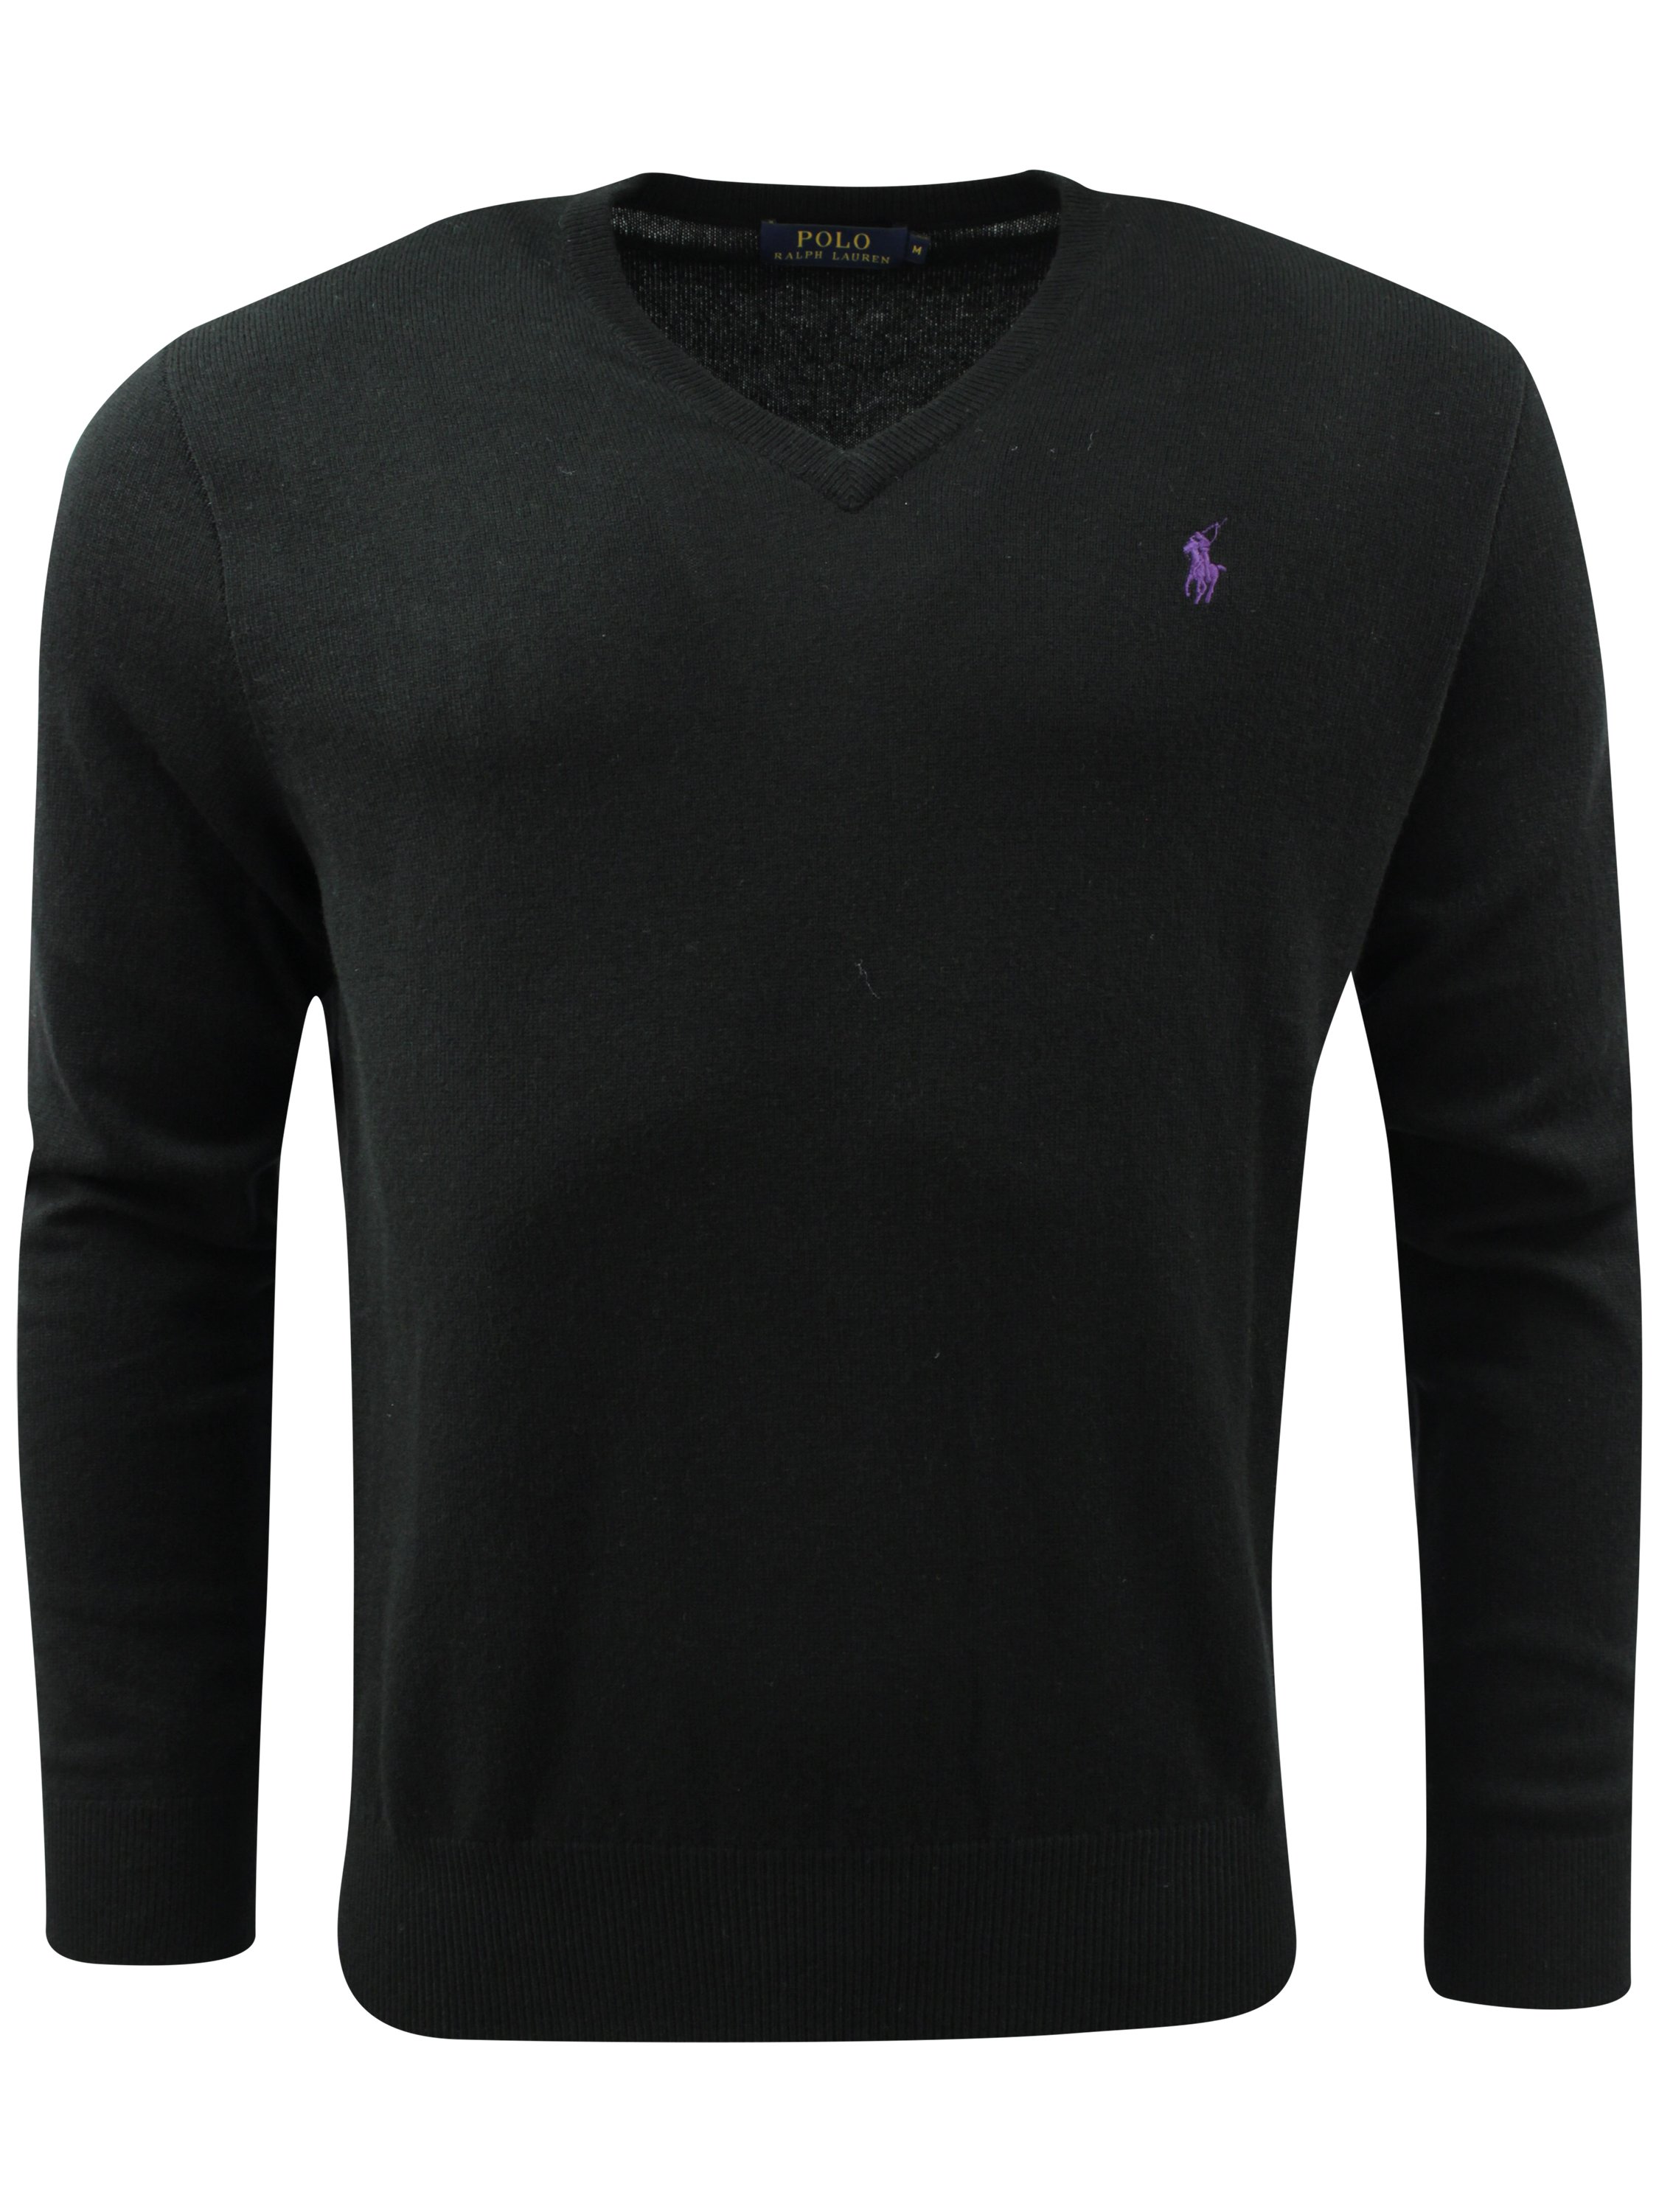 Buy Ralph Lauren 'Long Sleeve' Sweater - Polo Black